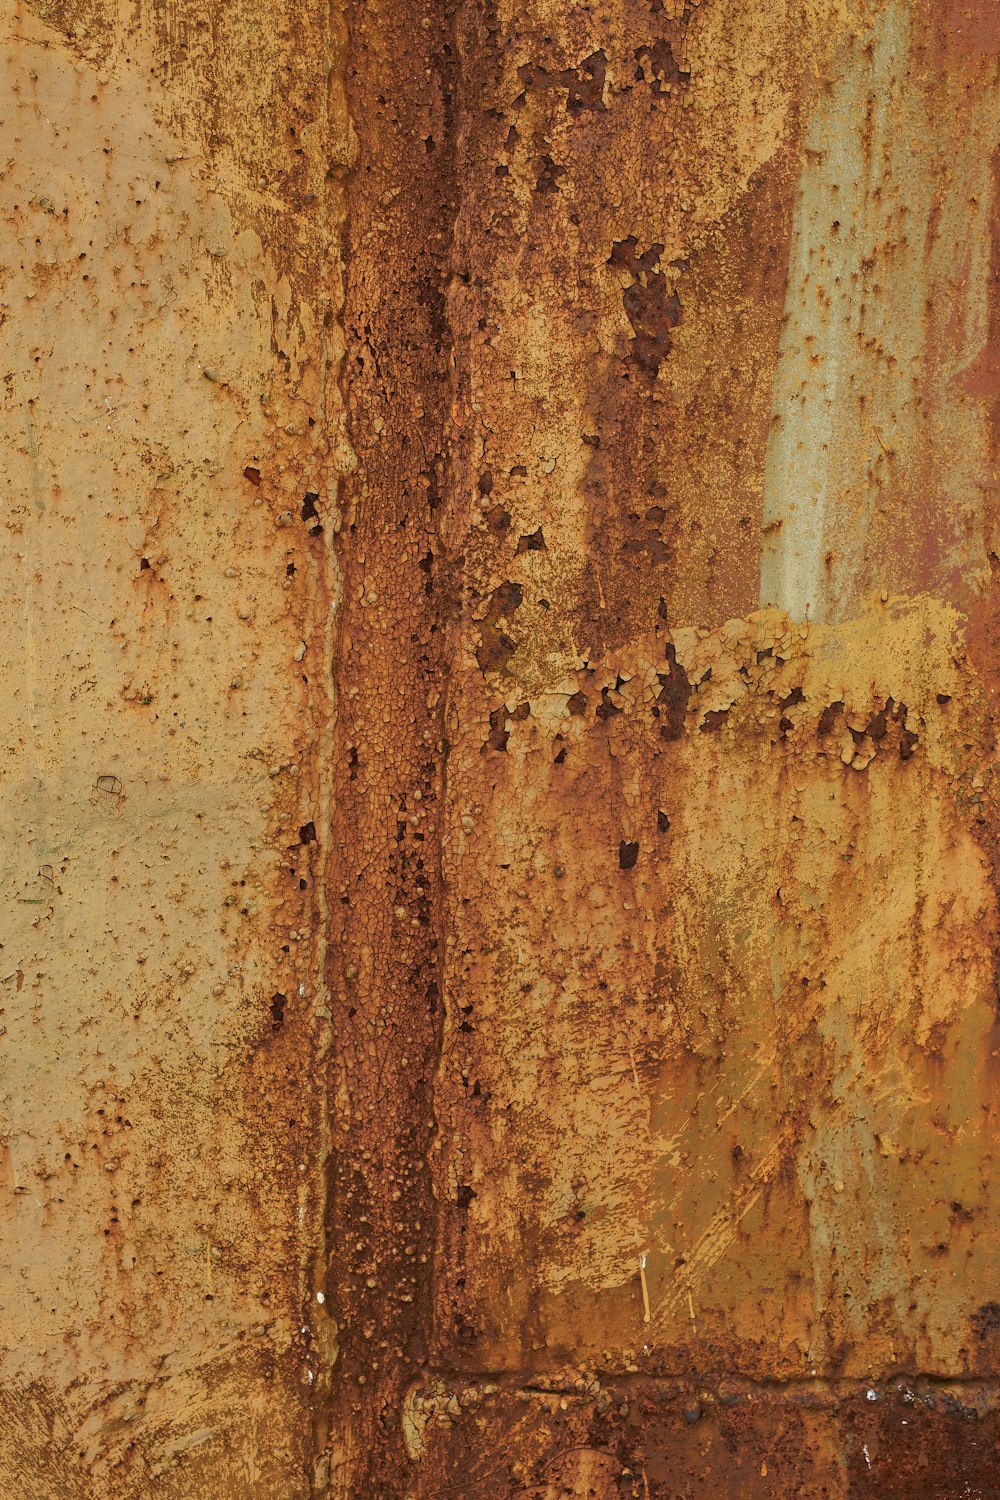 peinture abstraite marron et blanc